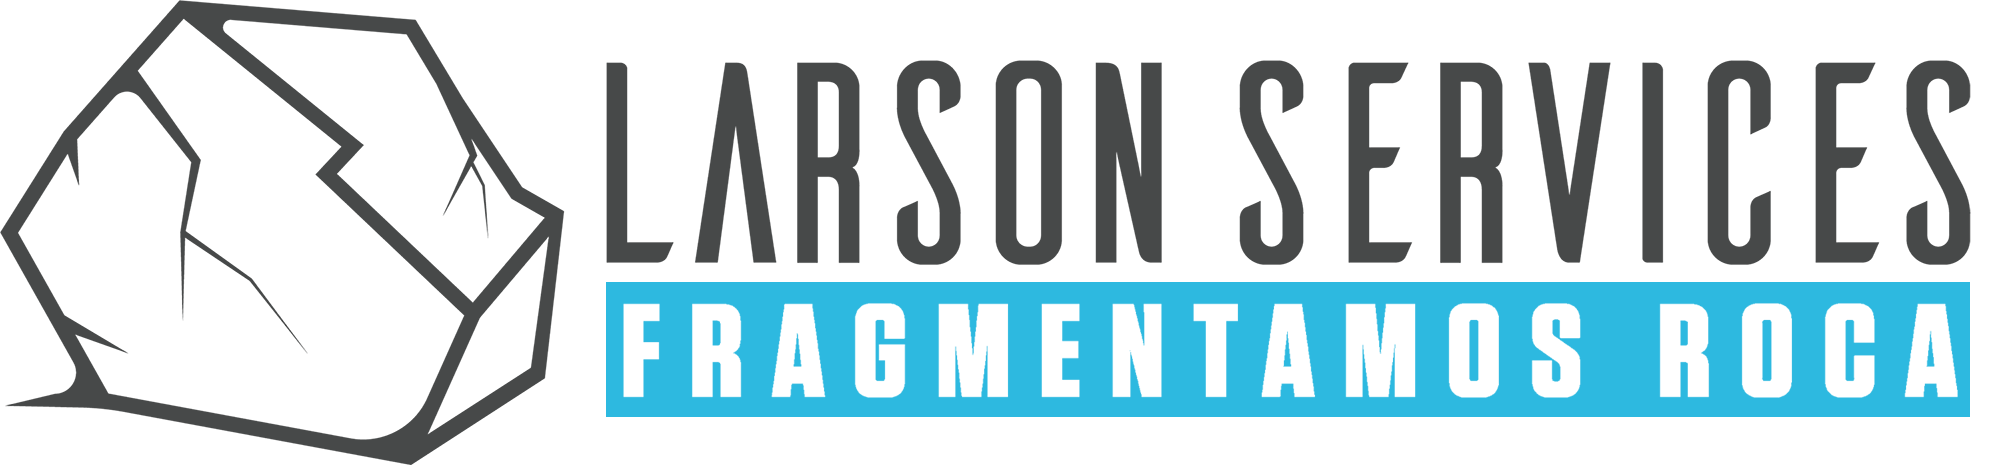 larson-services